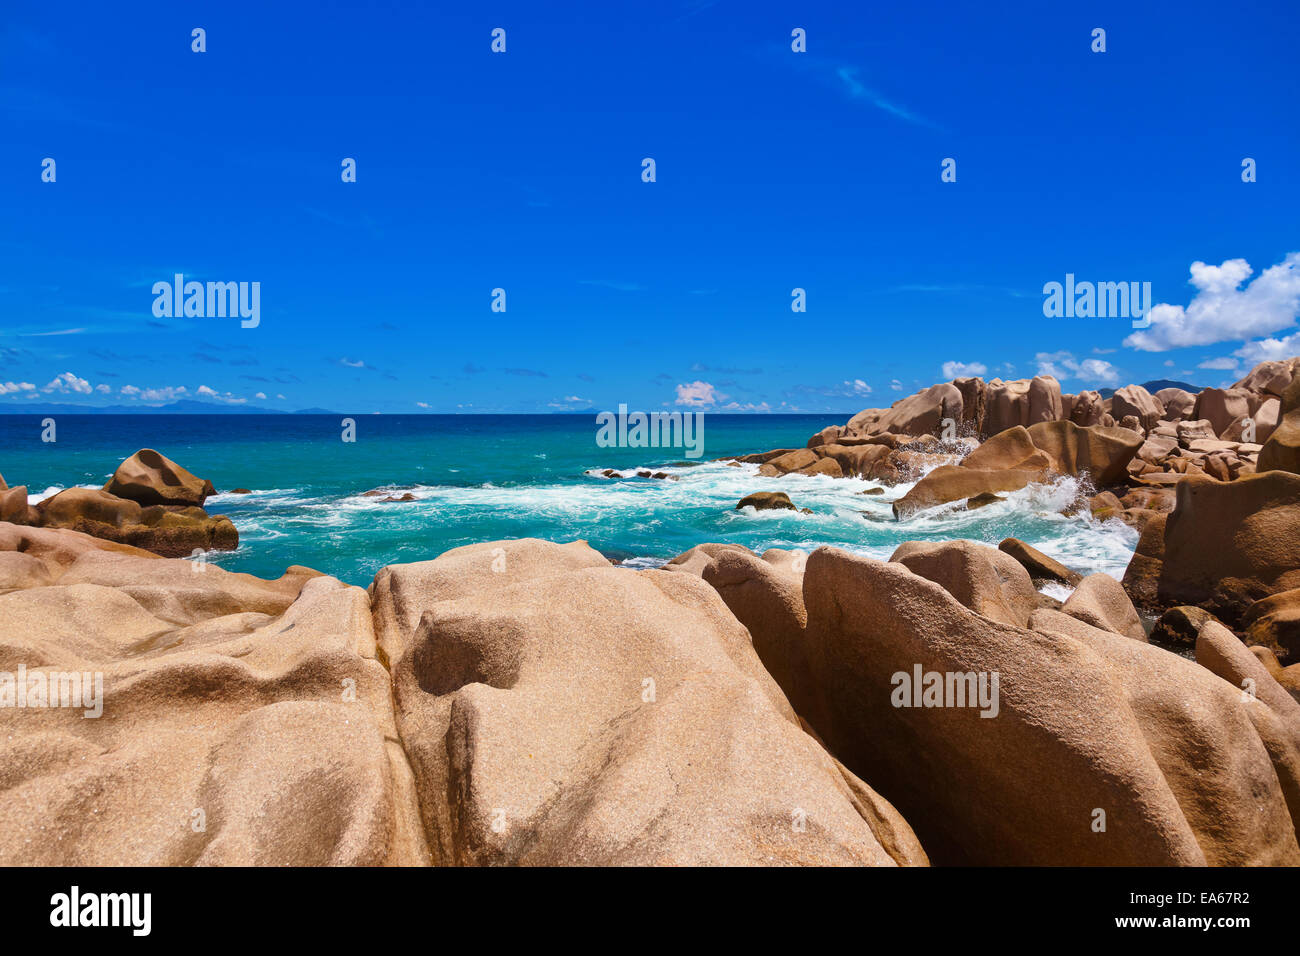 Tropical beach at Seychelles Stock Photo